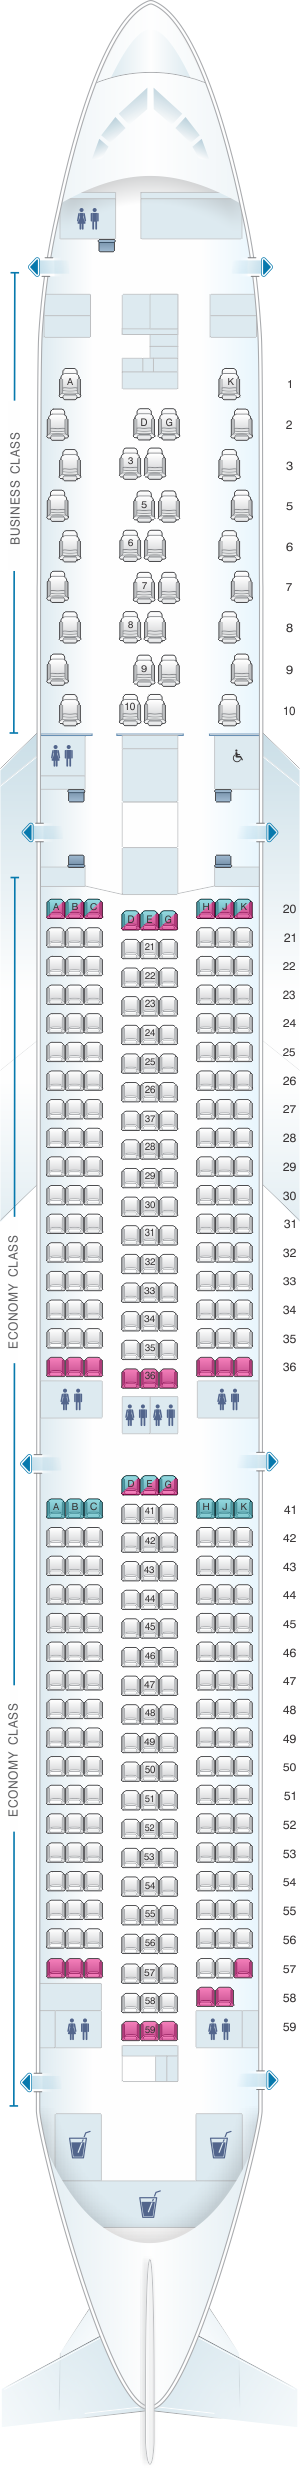 Seat map for Eva Air Boeing B787 10